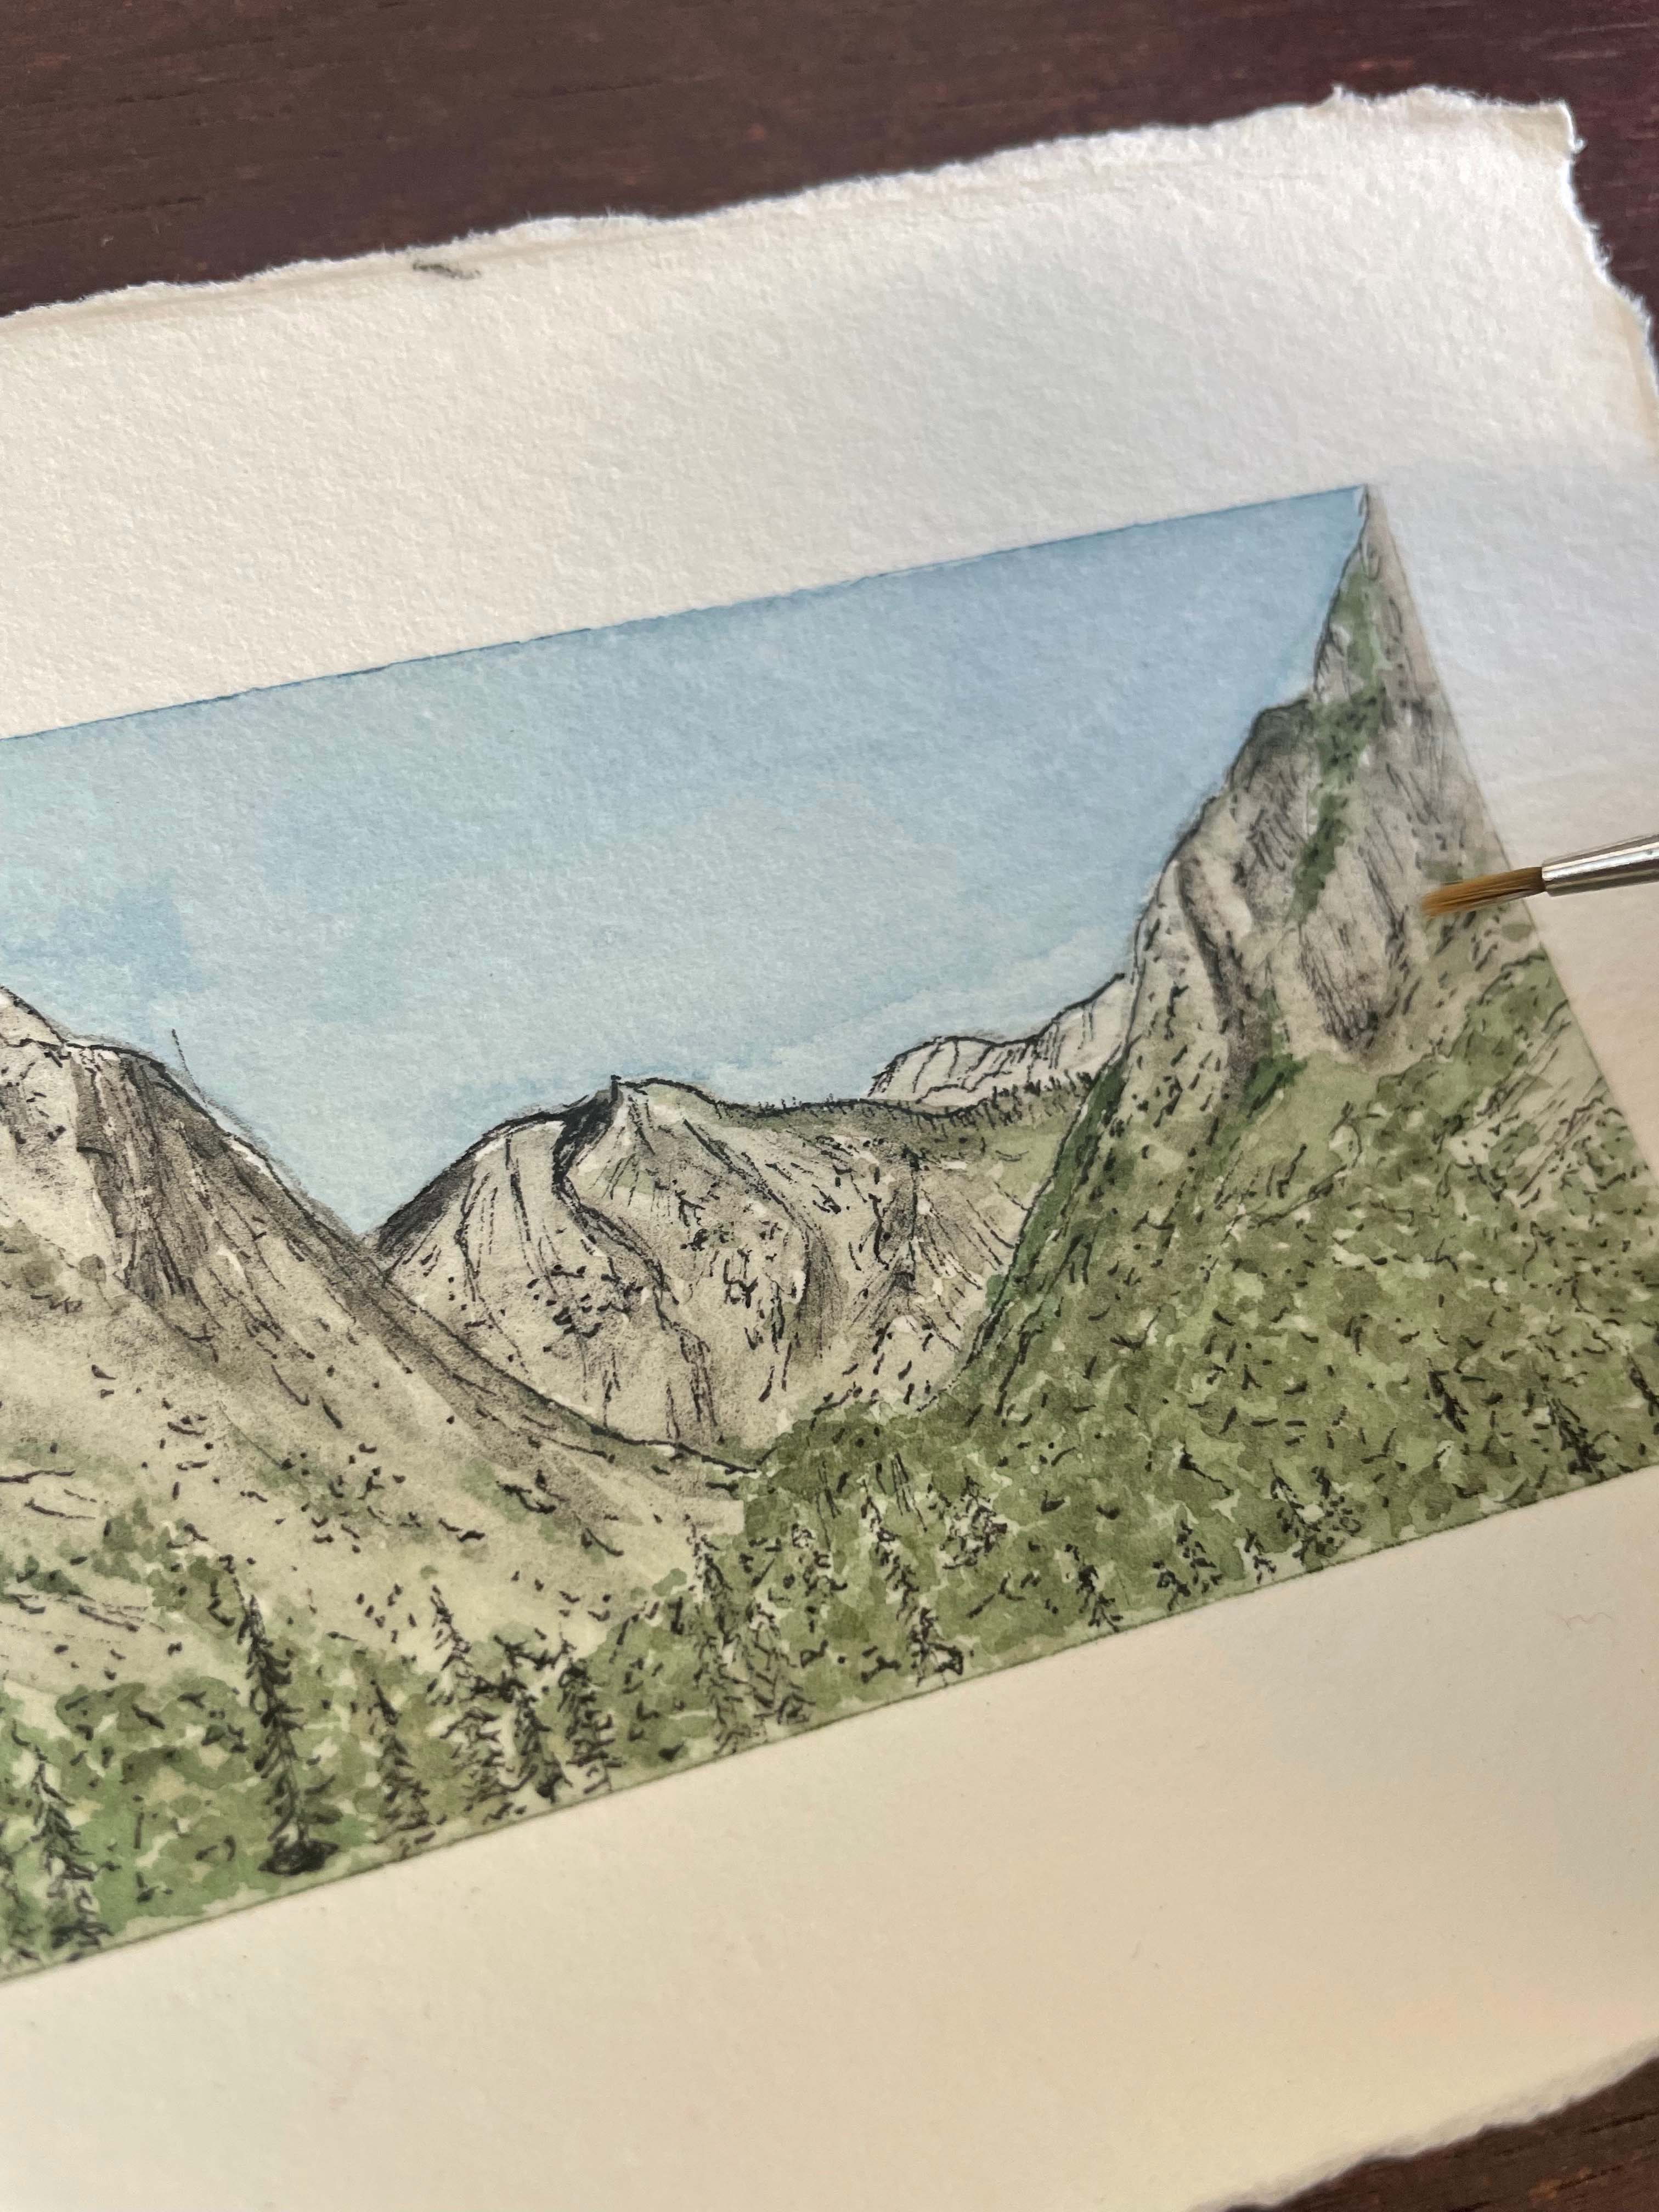 Kings Canyon National Park Mini Watercolor Original